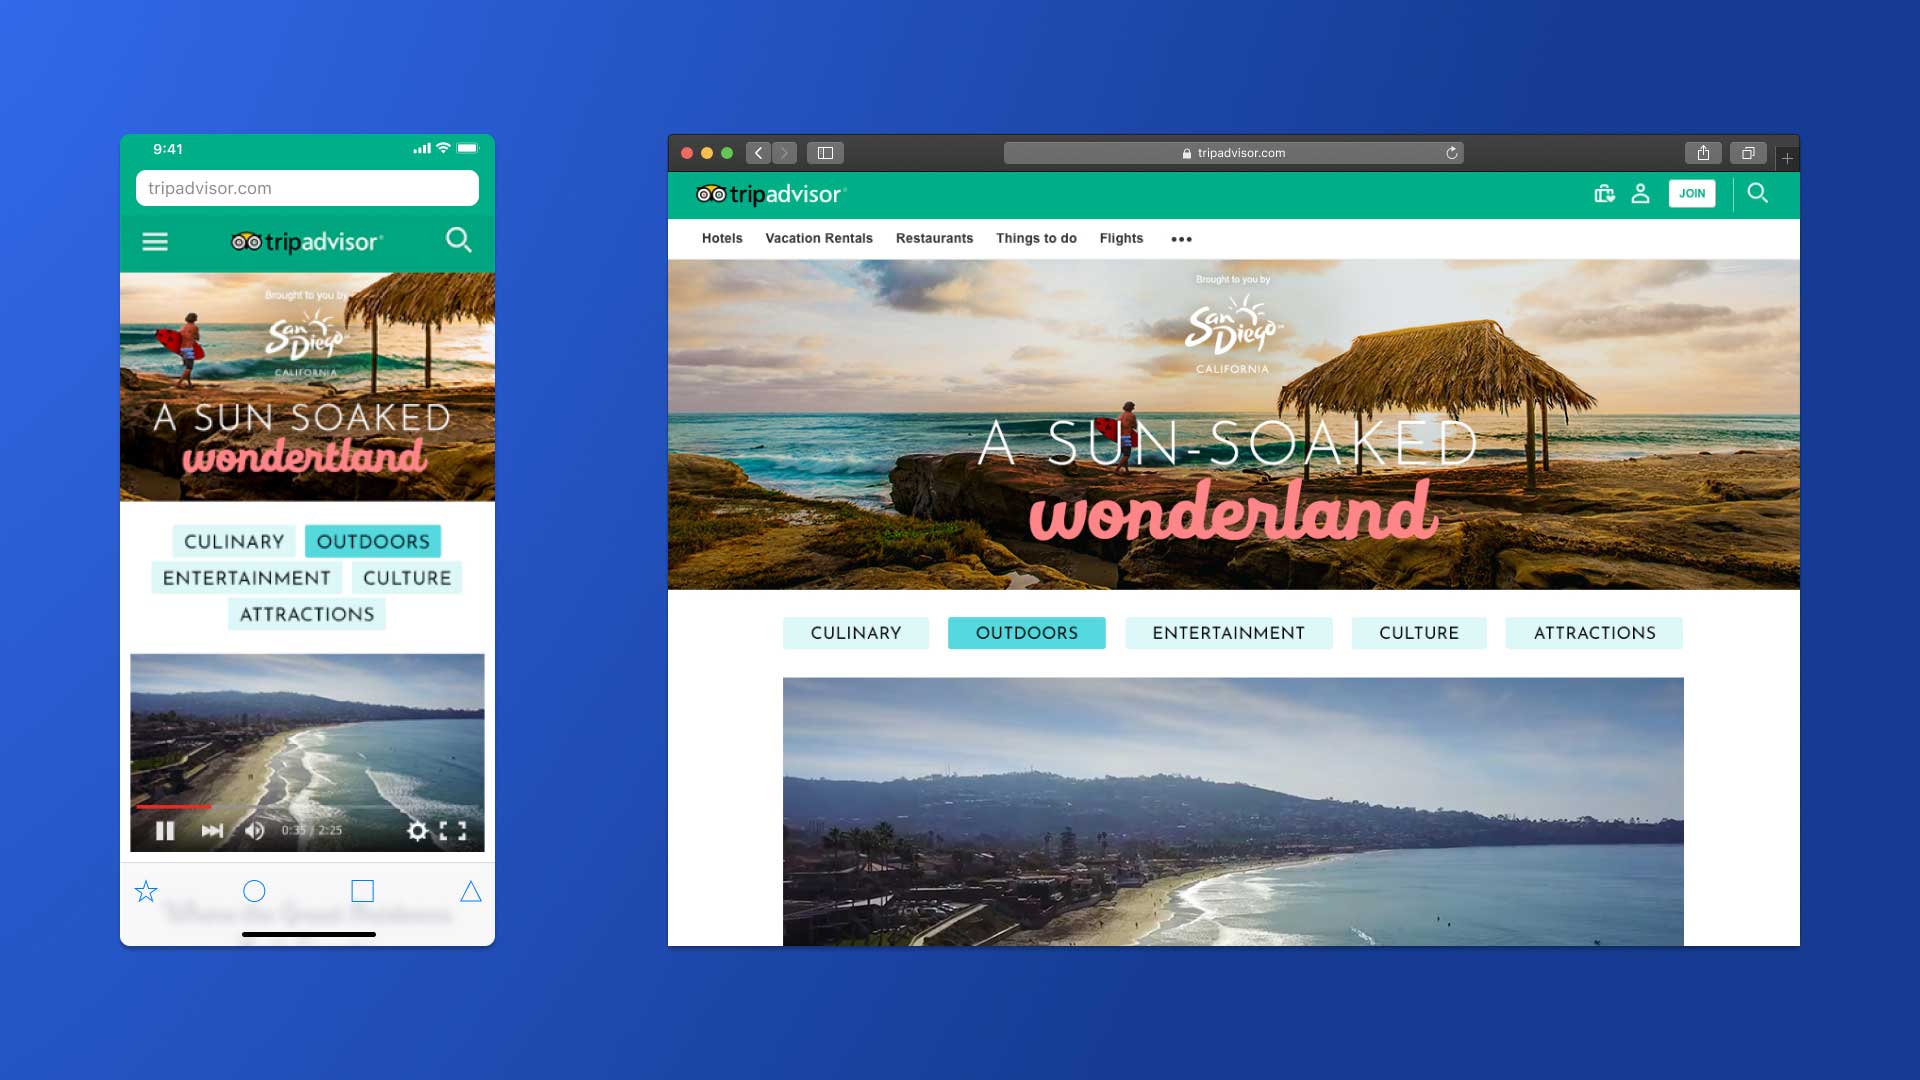 San Diego Tourism Campaign – Tripadvisor – Mobile & Desktop Experience